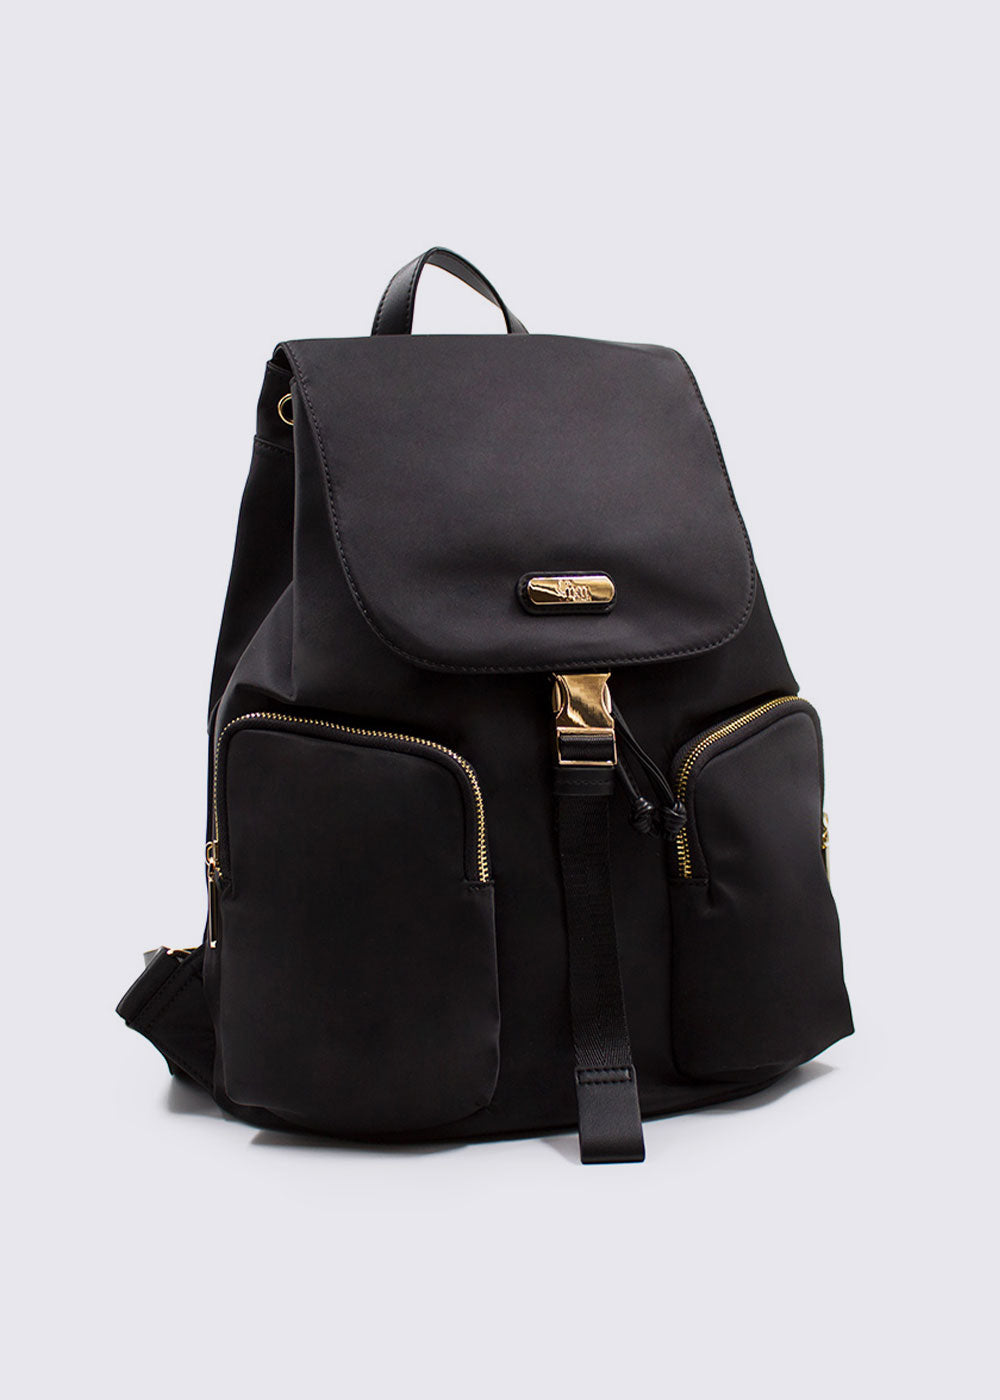 Mini Backpack Negra con Bolsas | Epicland